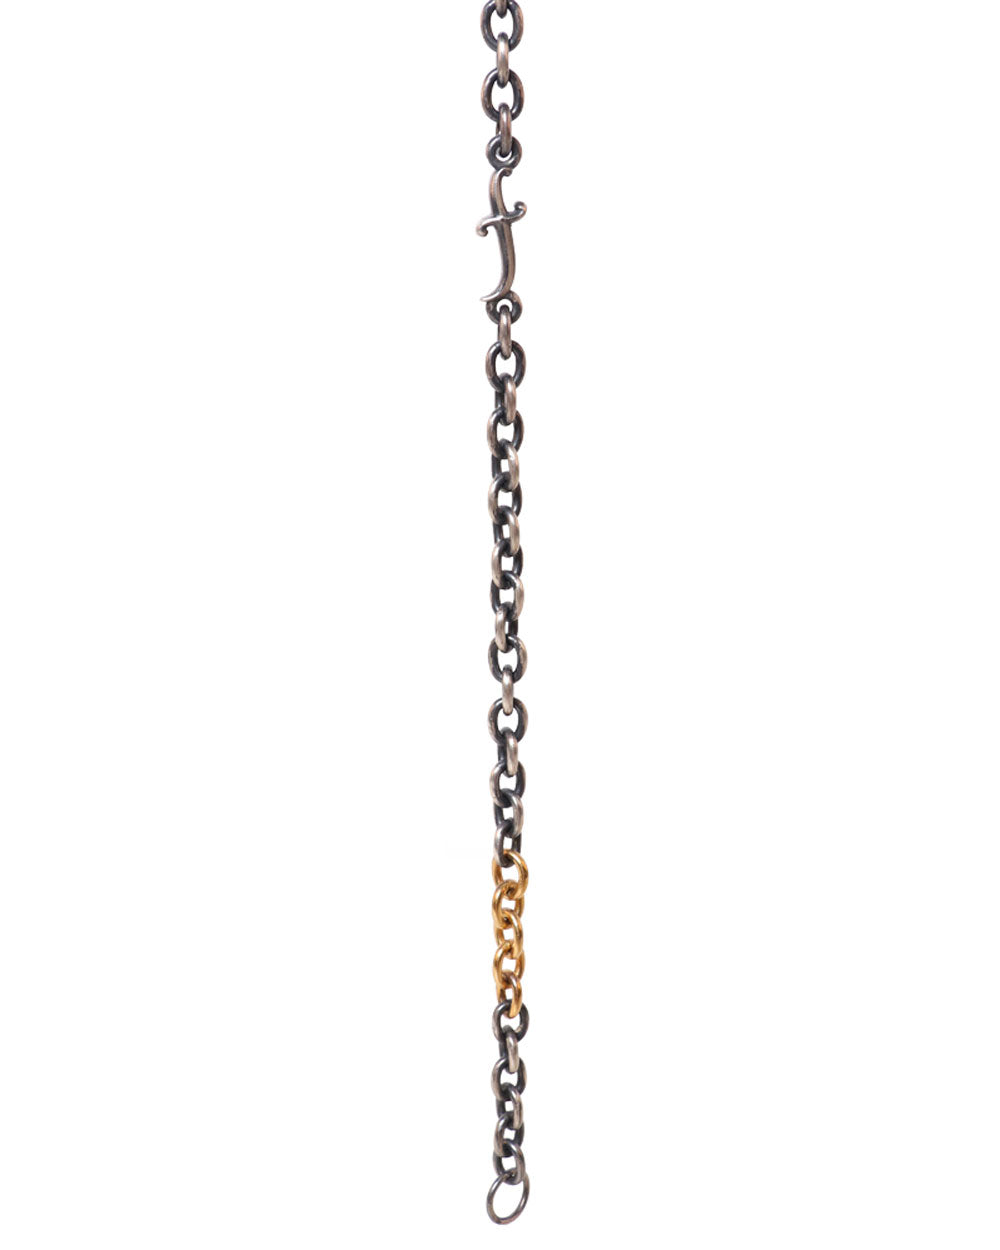 Medium Link Dagger Chain